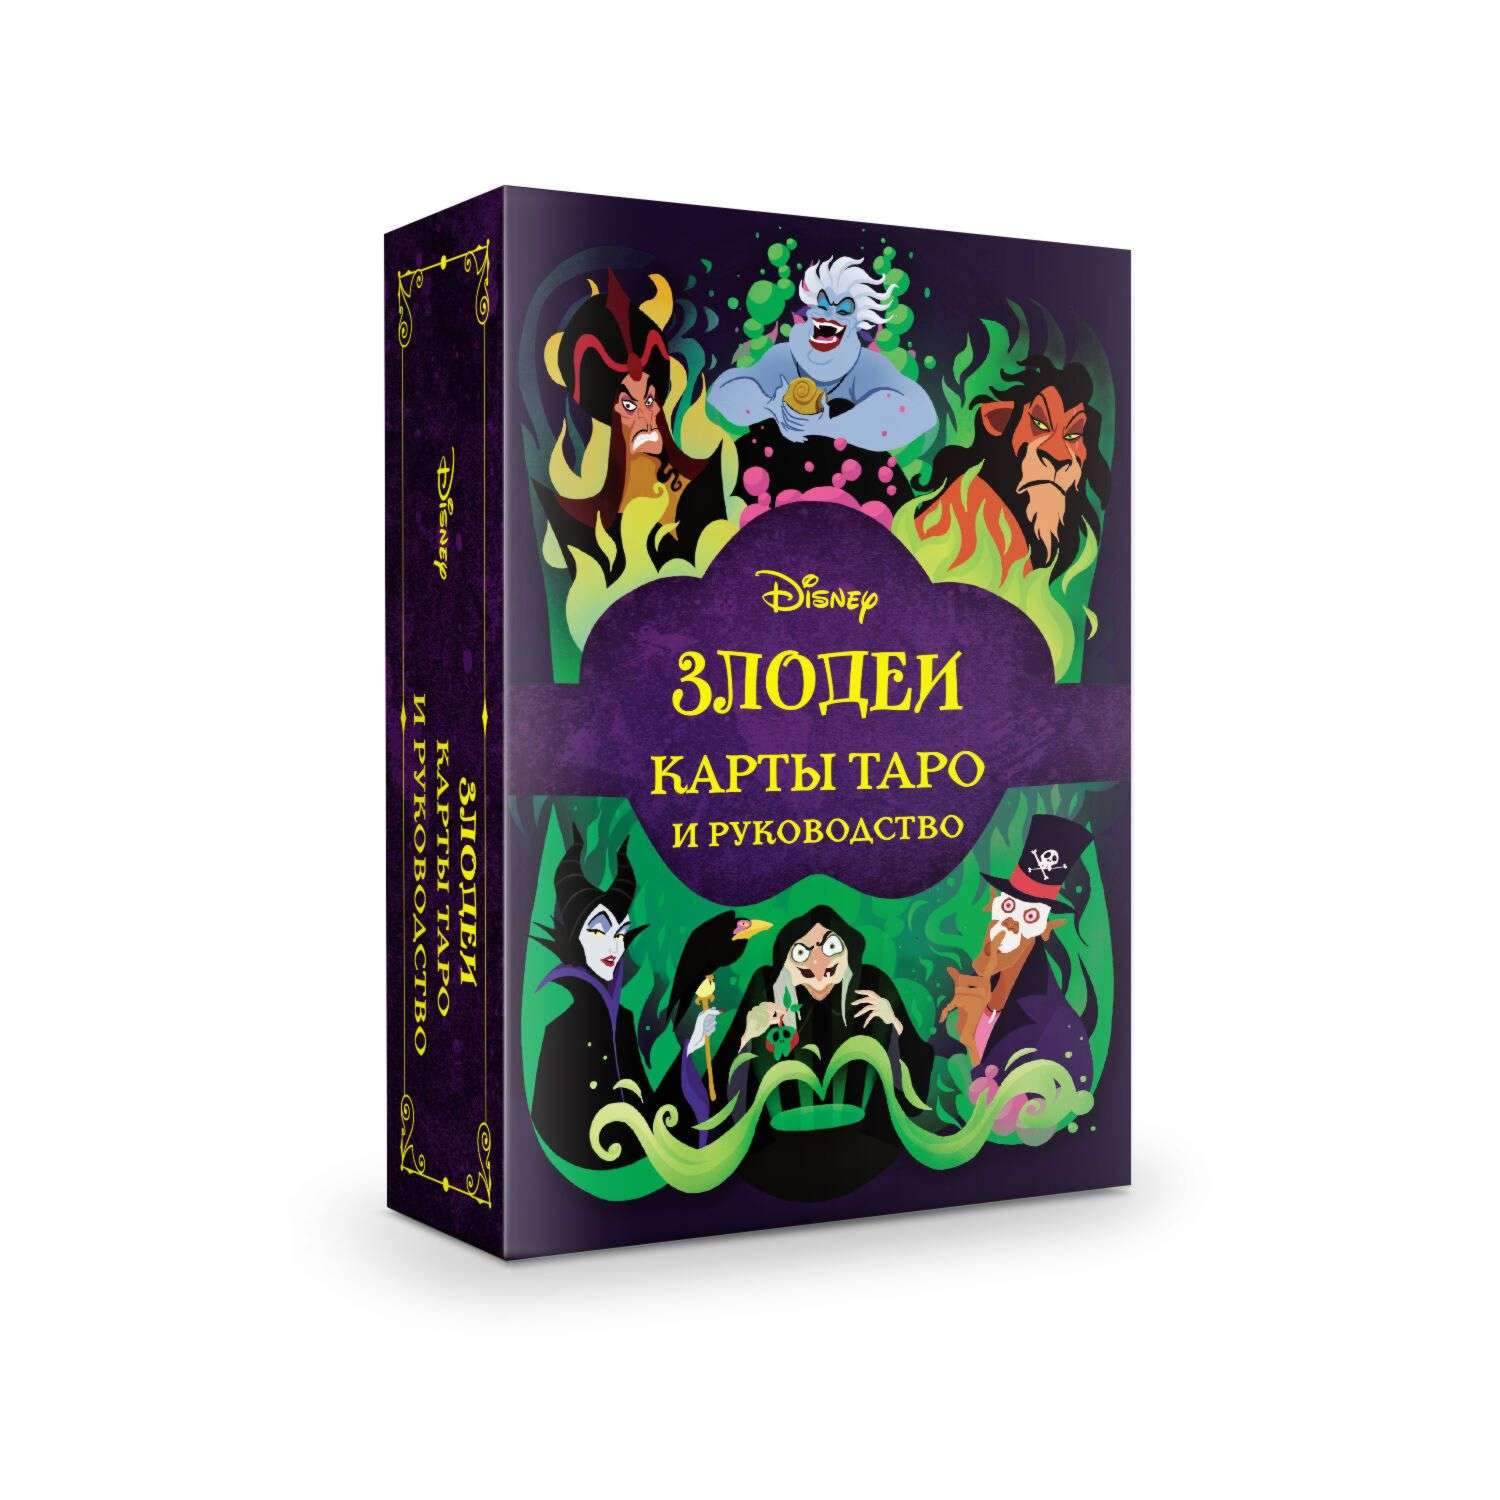 Книга Disney Злодеи Карты Таро и руководство набор в коробке - фото 1